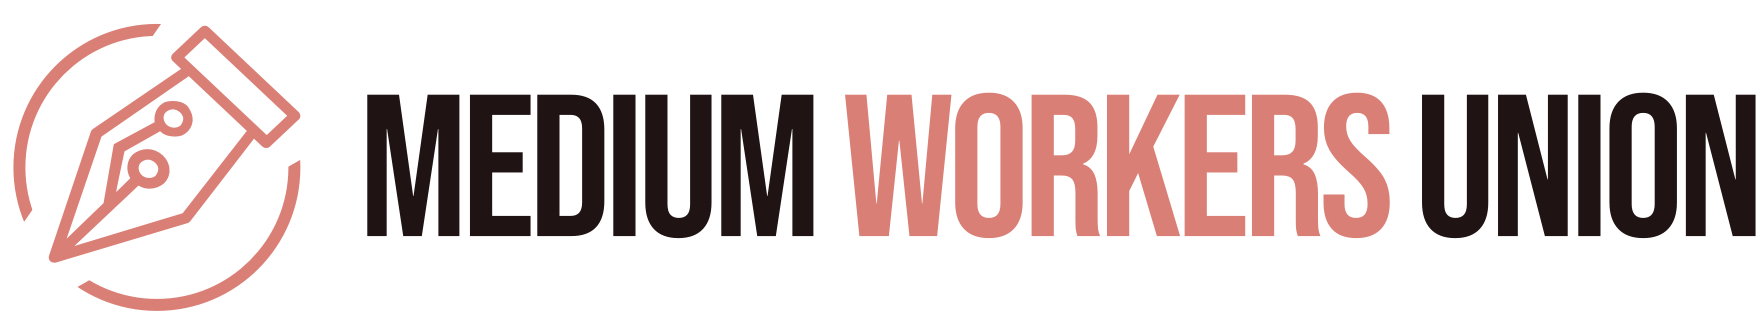 Medium Workers Union Logo